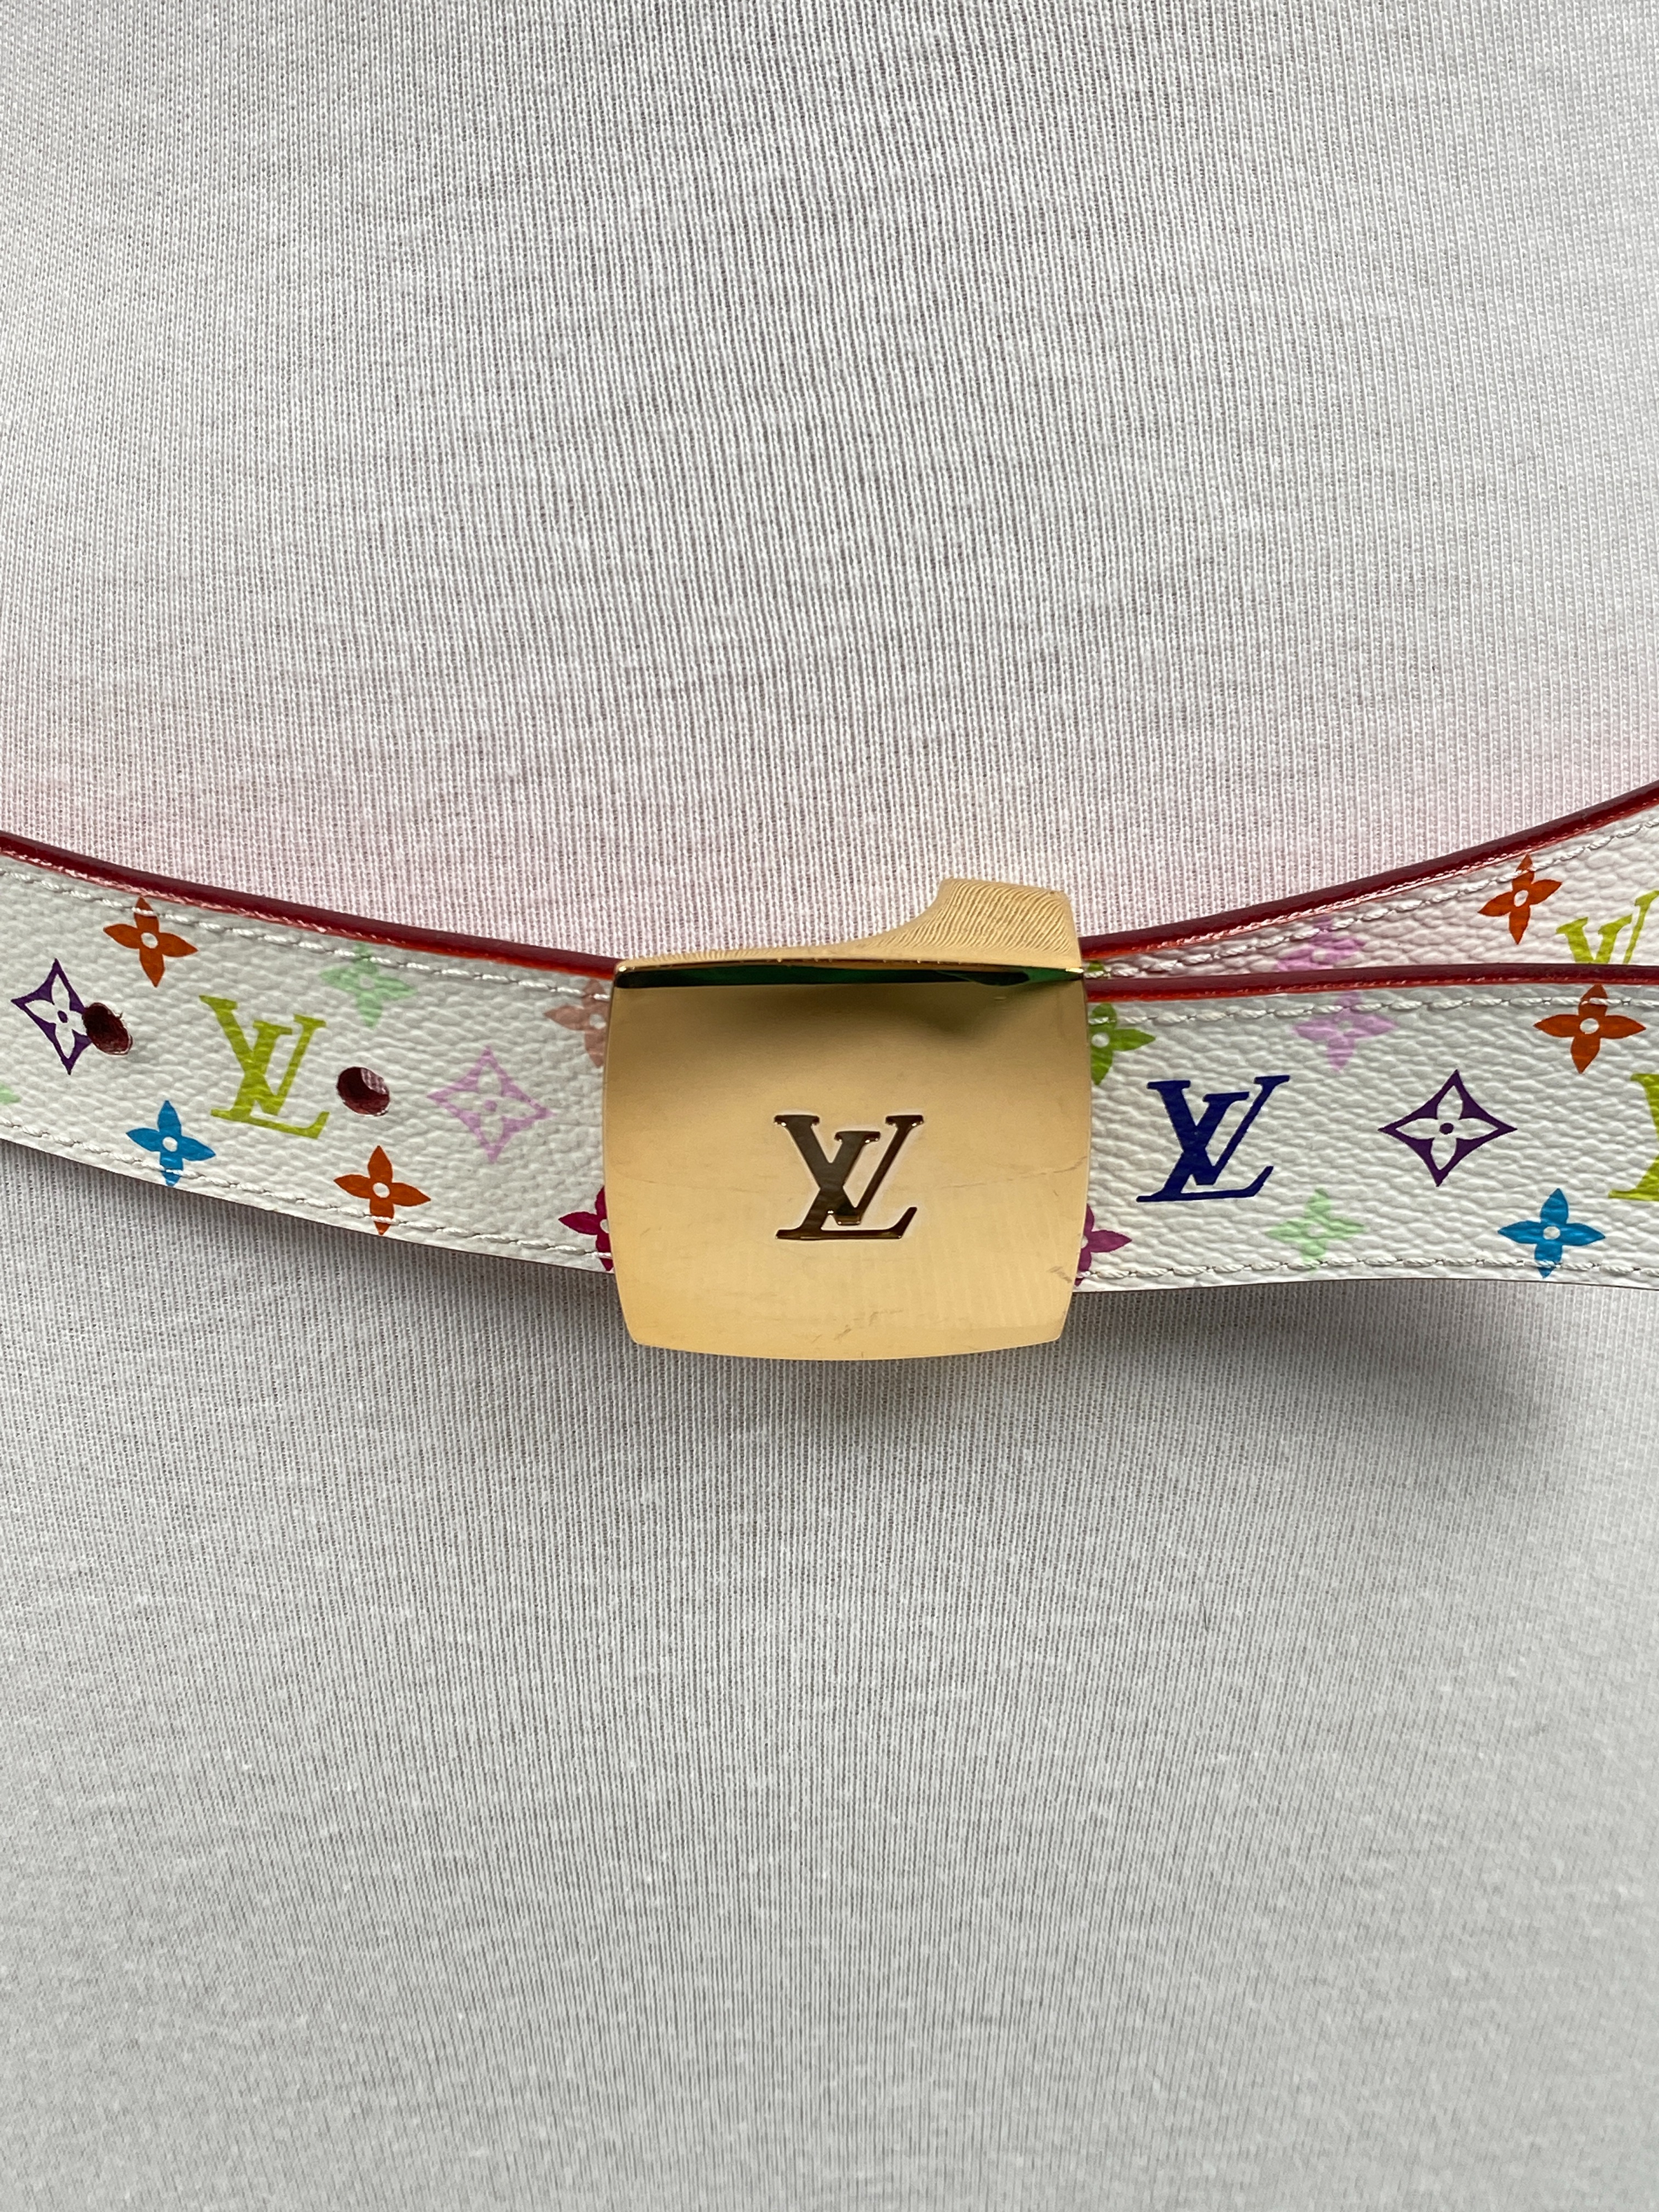 Louis Vuitton Multi Color Monogram on White Belt w/Gold Buckle